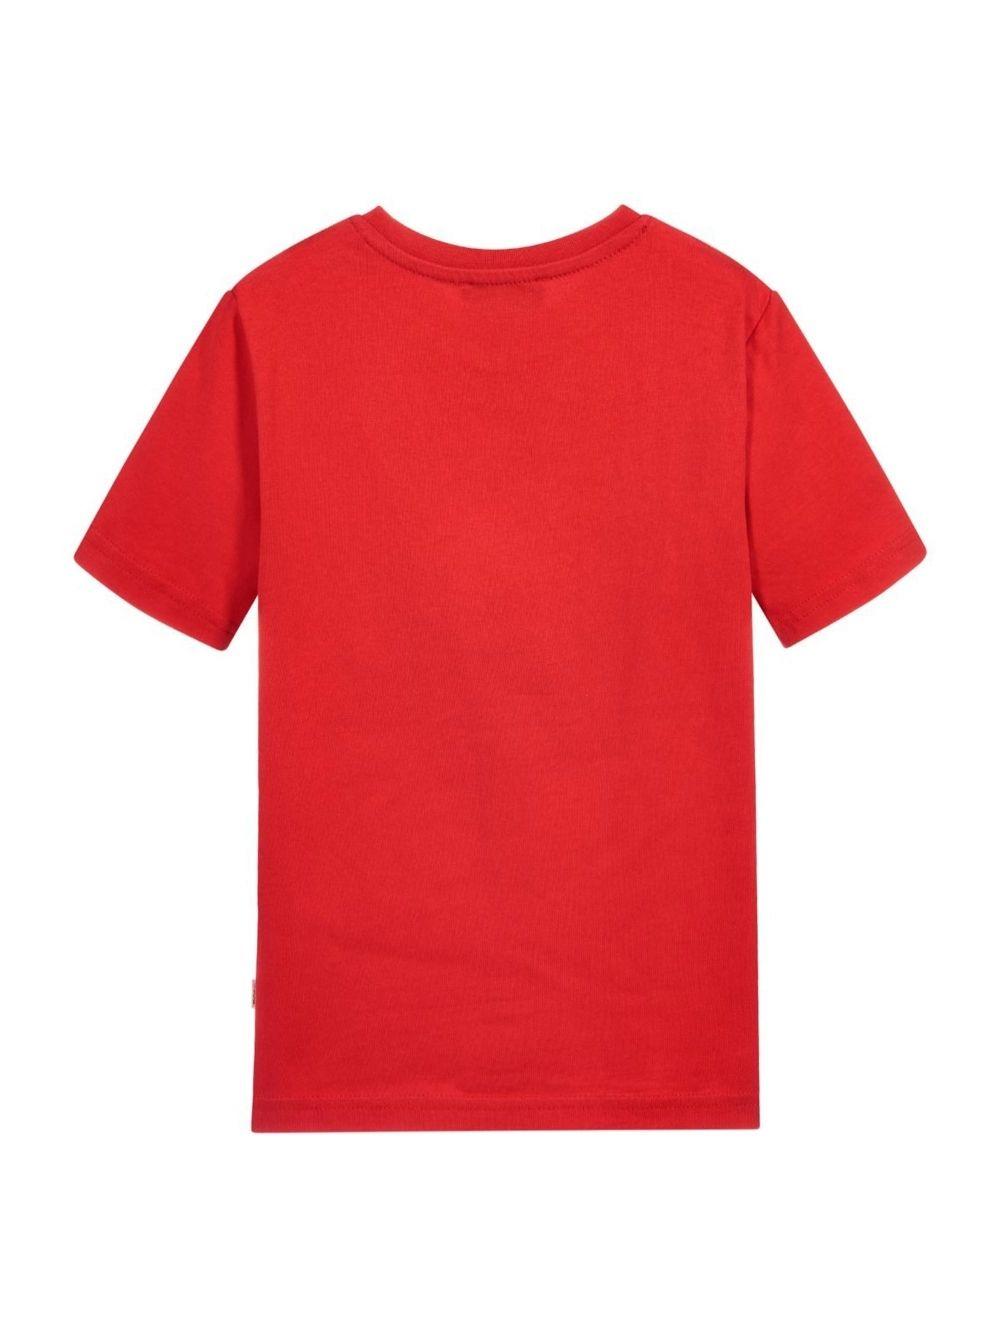 Grey and Red Logo - Hugo Boss Boys Red T Shirt. Children's Wear